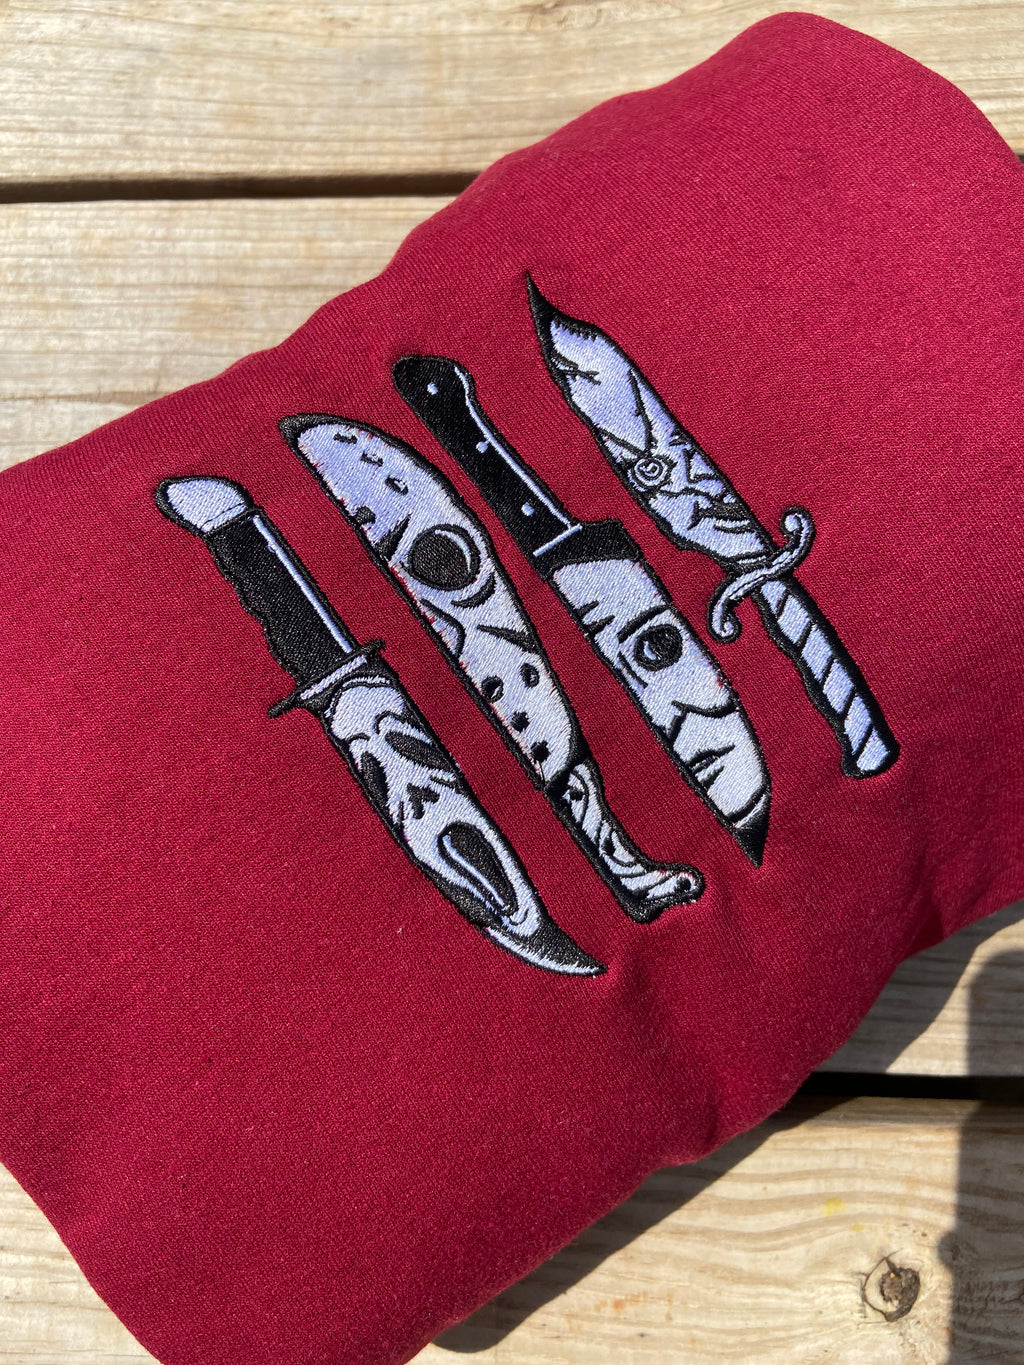 Horror knife embroidery design sweatshirts